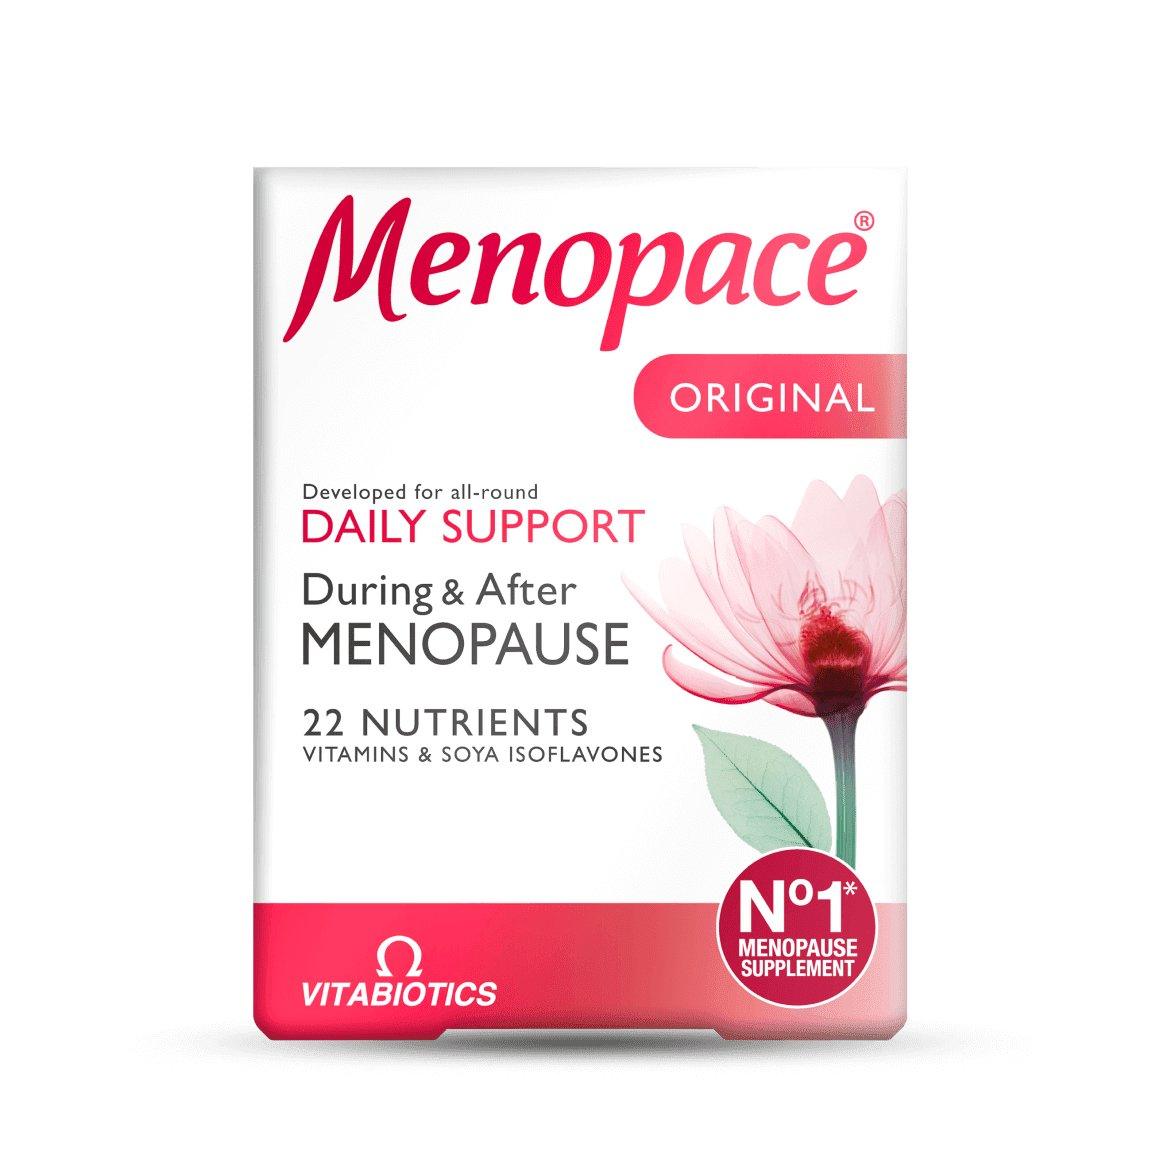 Menopace Original - Rightangled